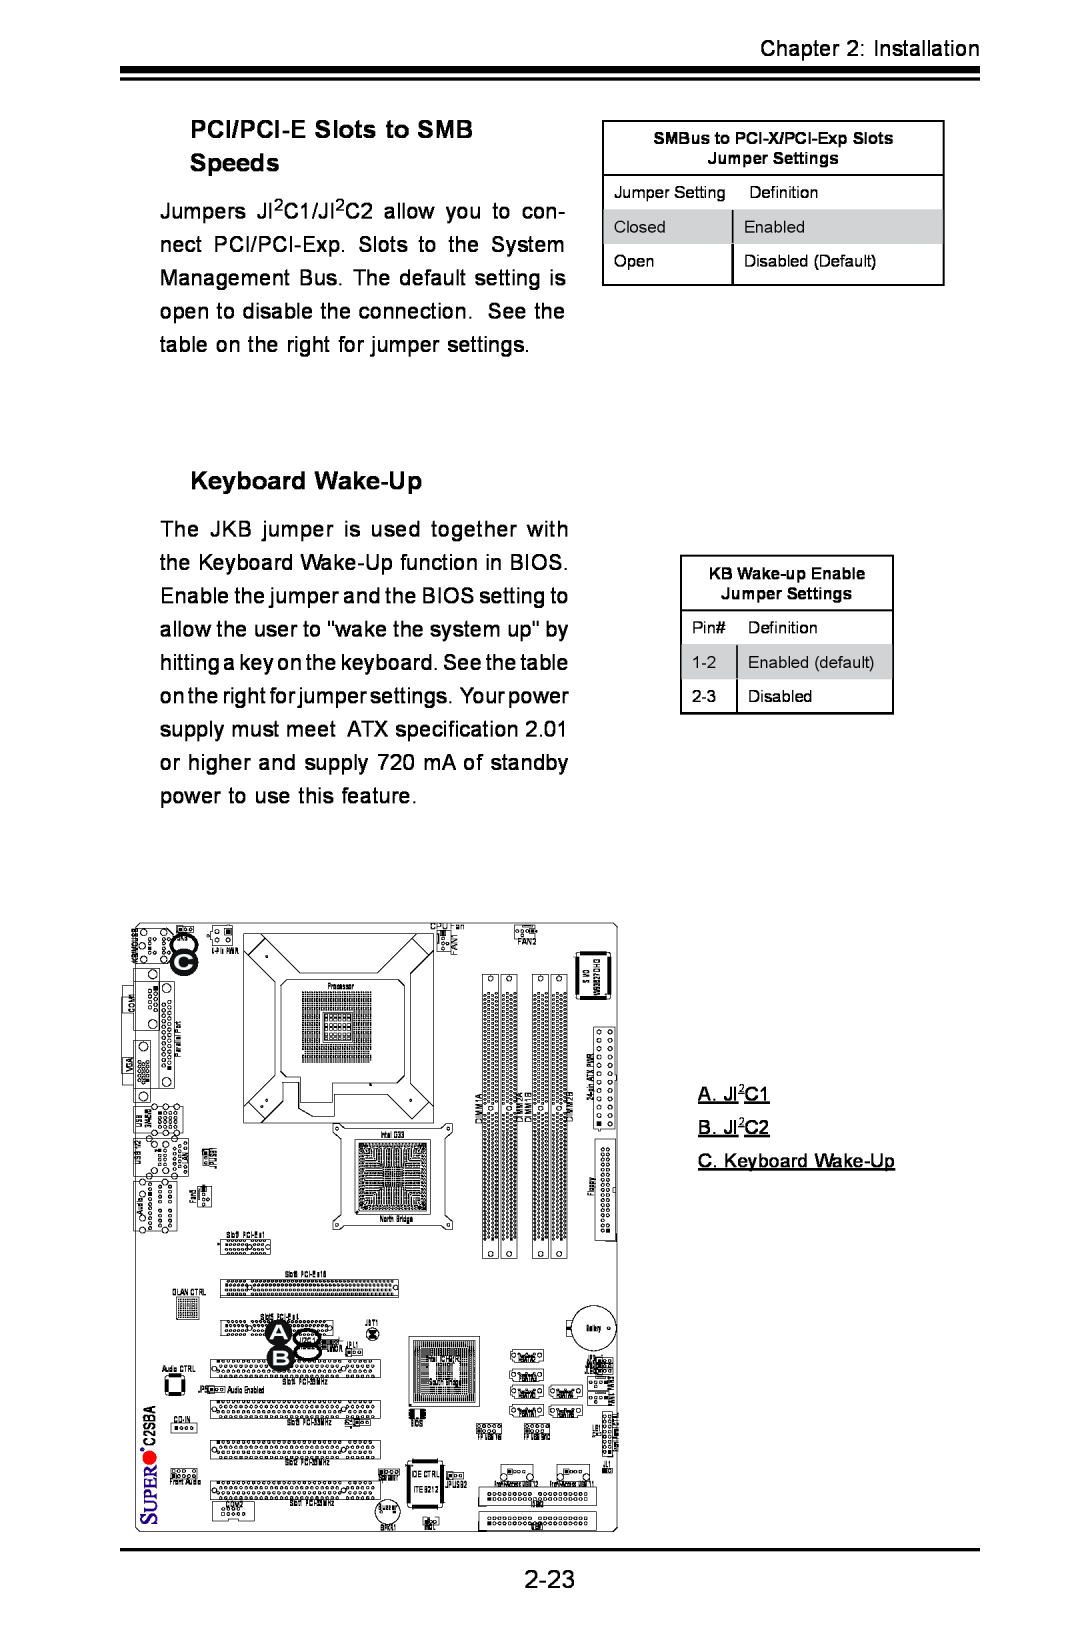 SUPER MICRO Computer C2SBA+II, C2SBE user manual PCI/PCI-E Slots to SMB Speeds, A. JI2C1 B. JI2C2 C. Keyboard Wake-Up 